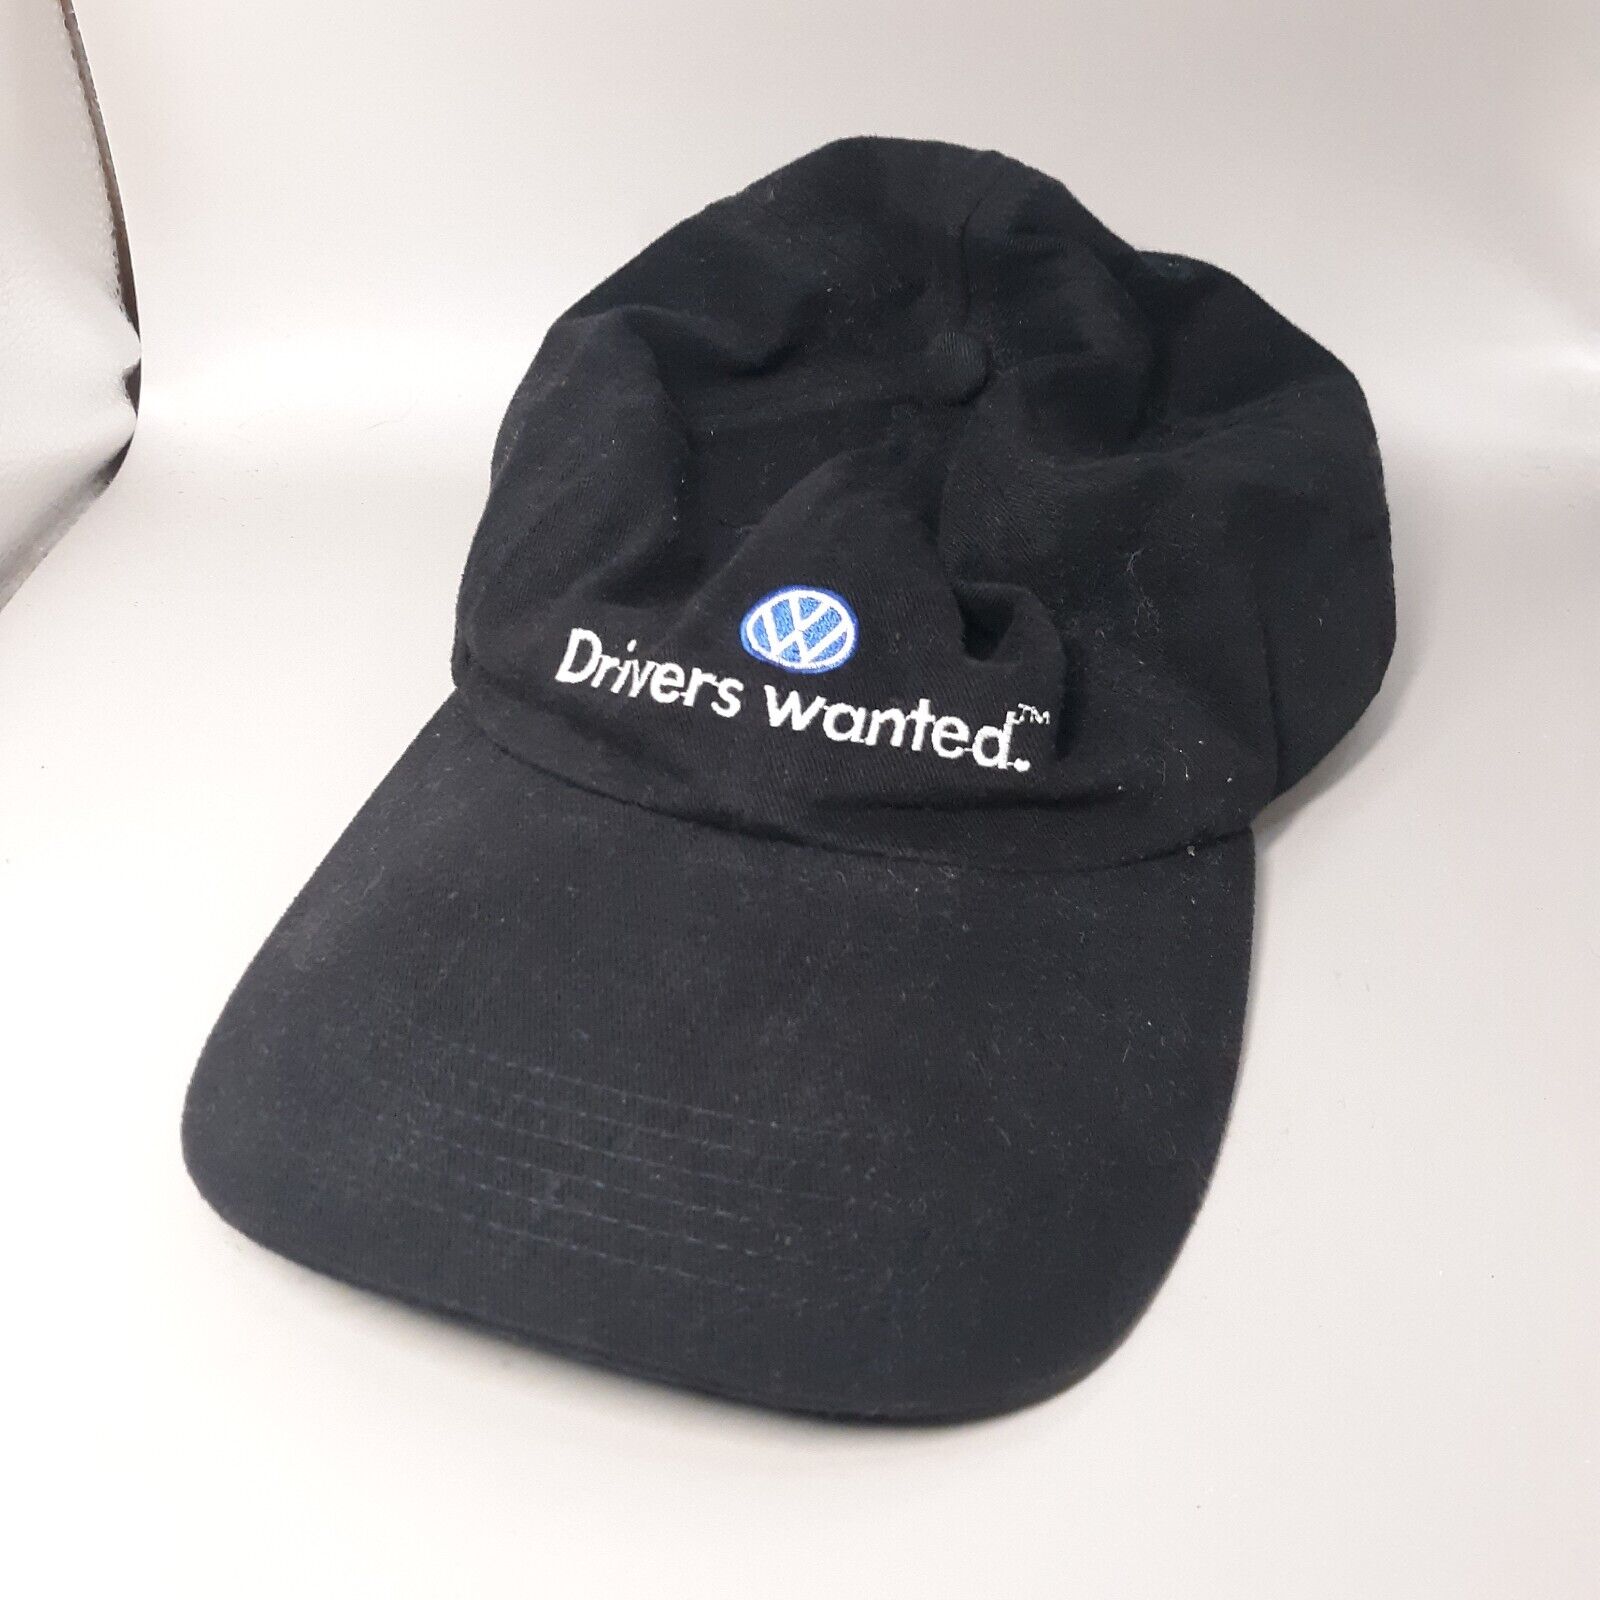 VW VOLKSWAGEN Drivers Wanted Black Cap Hat Strapback 1990s Vintage Logo